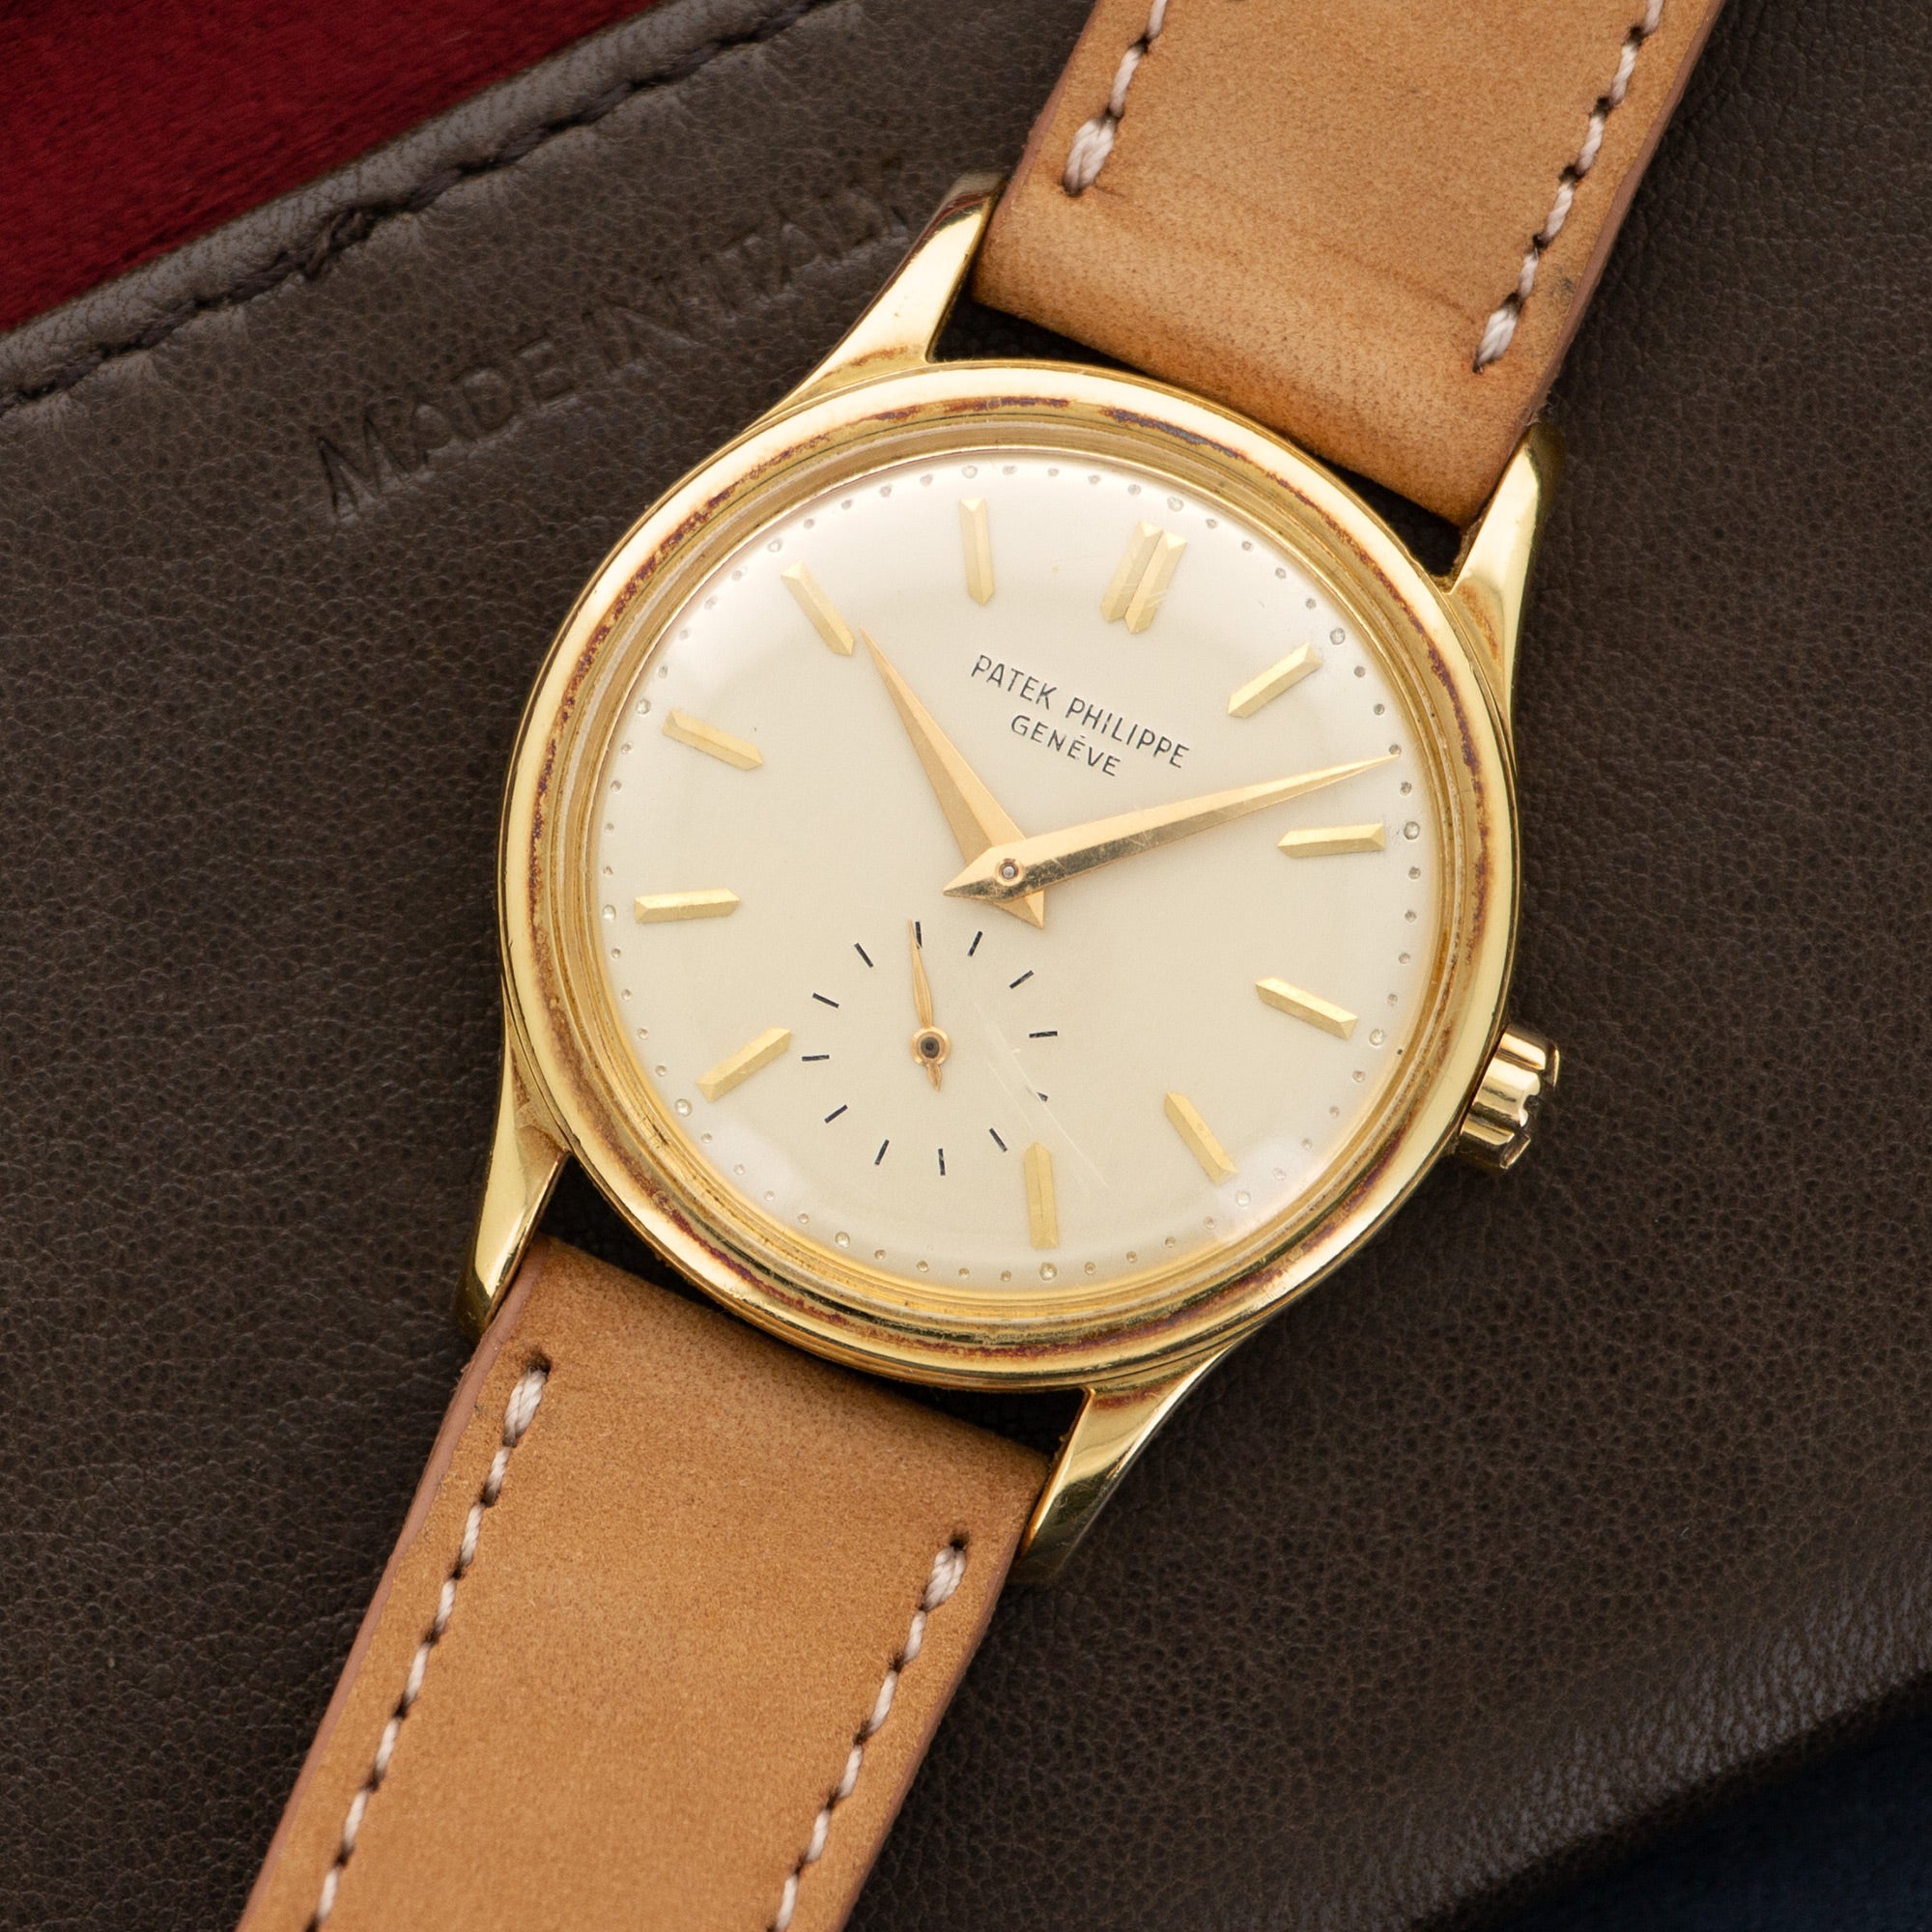 Patek Philippe - Patek Philippe Yellow Gold Automatic Calatrava Watch Ref. 3439 - The Keystone Watches